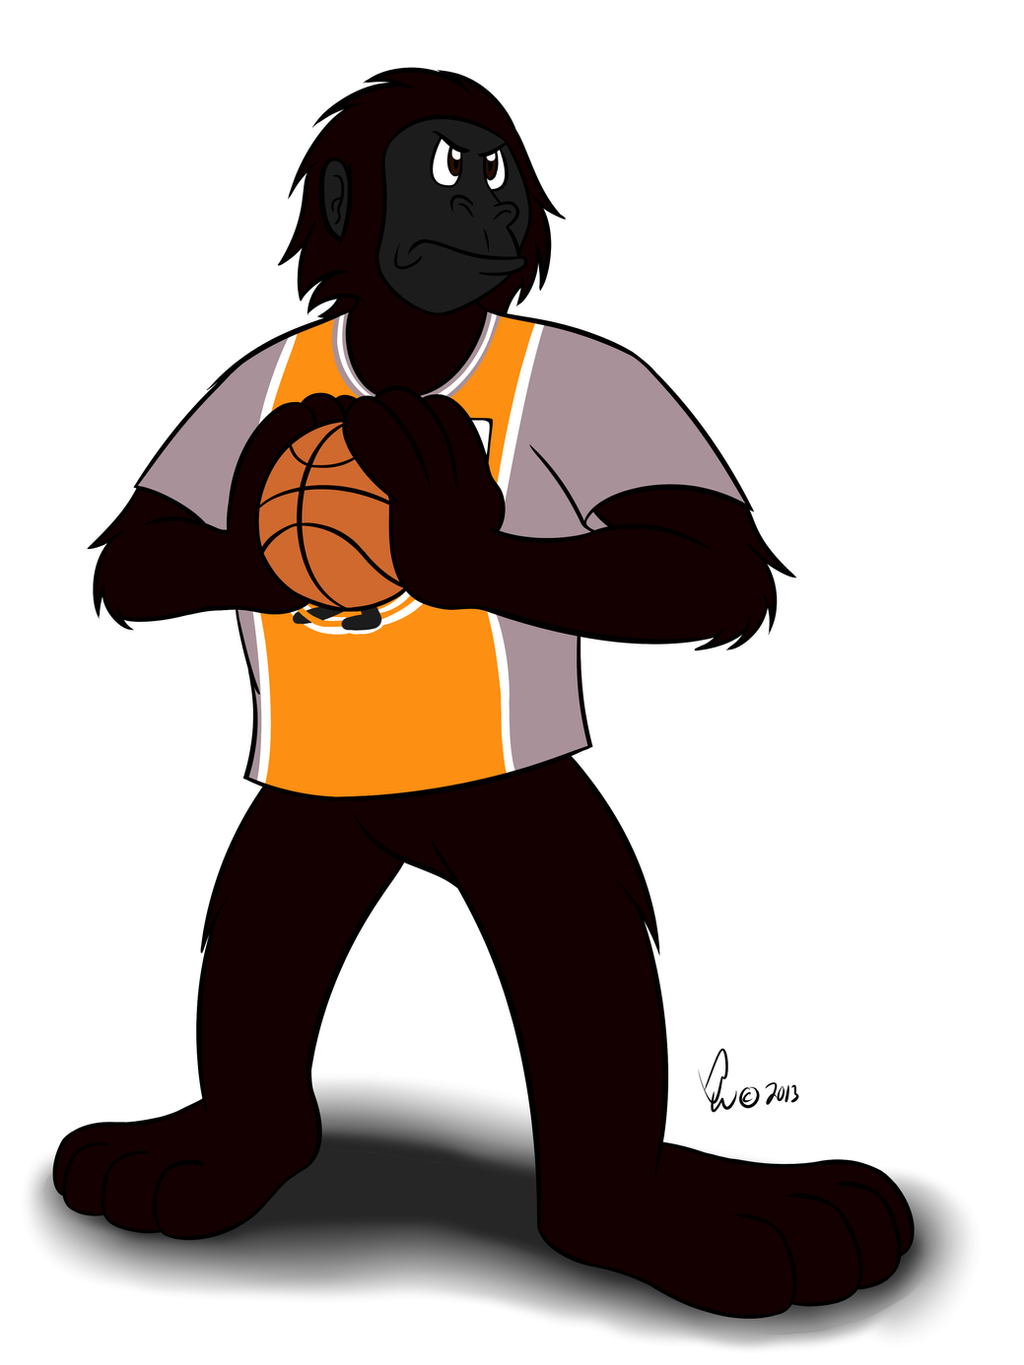 NBA Mascots - Go the Gorilla by Bleuxwolf on DeviantArt1024 x 1365